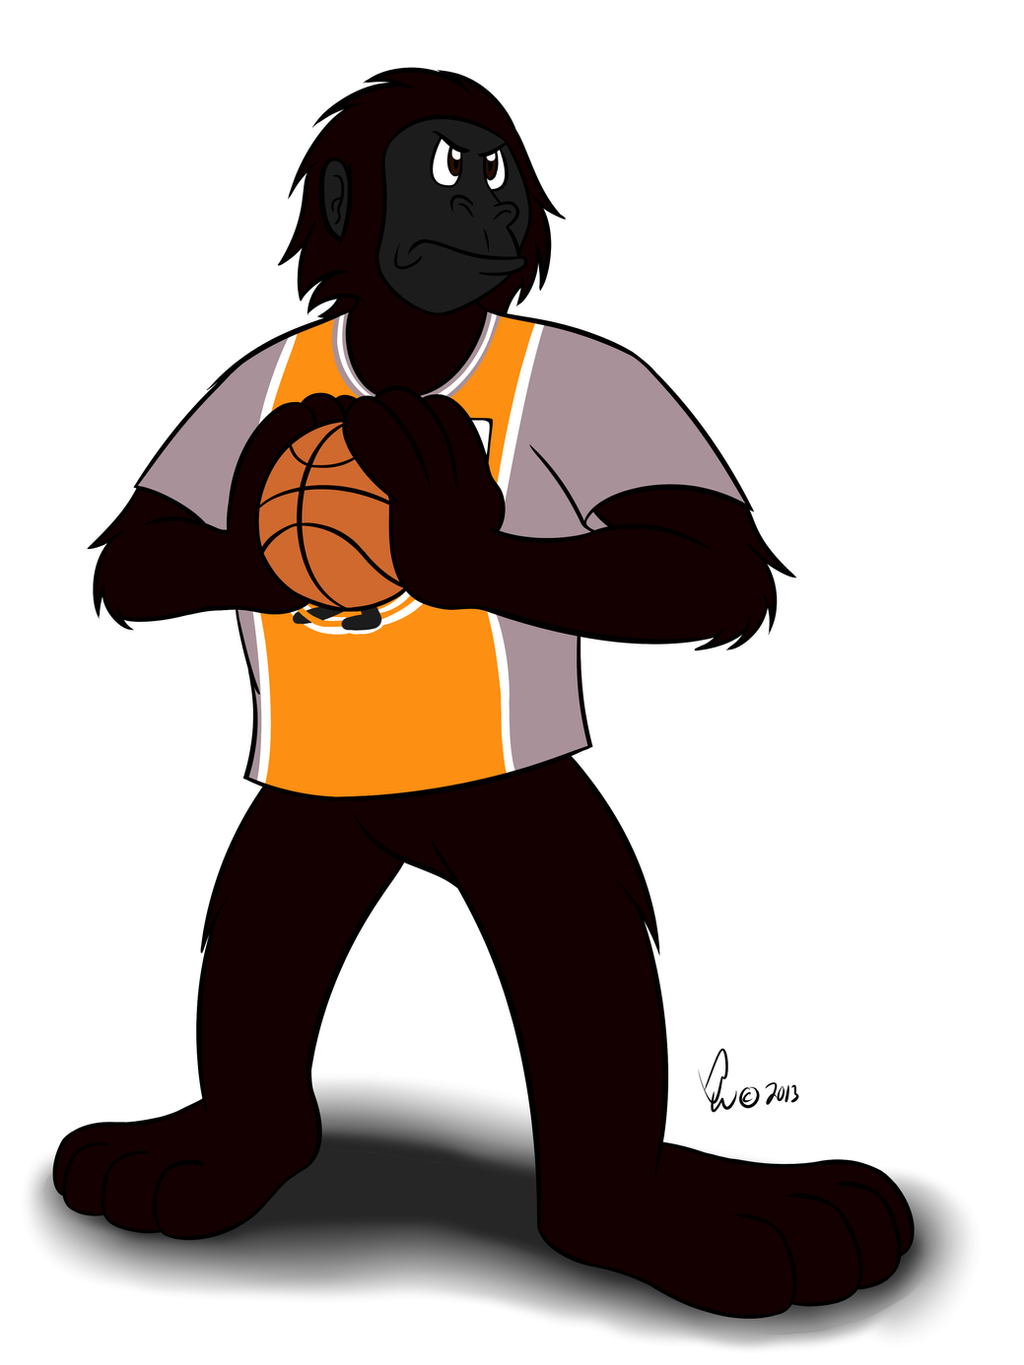 NBA Mascots - Go the Gorilla by Bleuxwolf on DeviantArt1024 x 1365